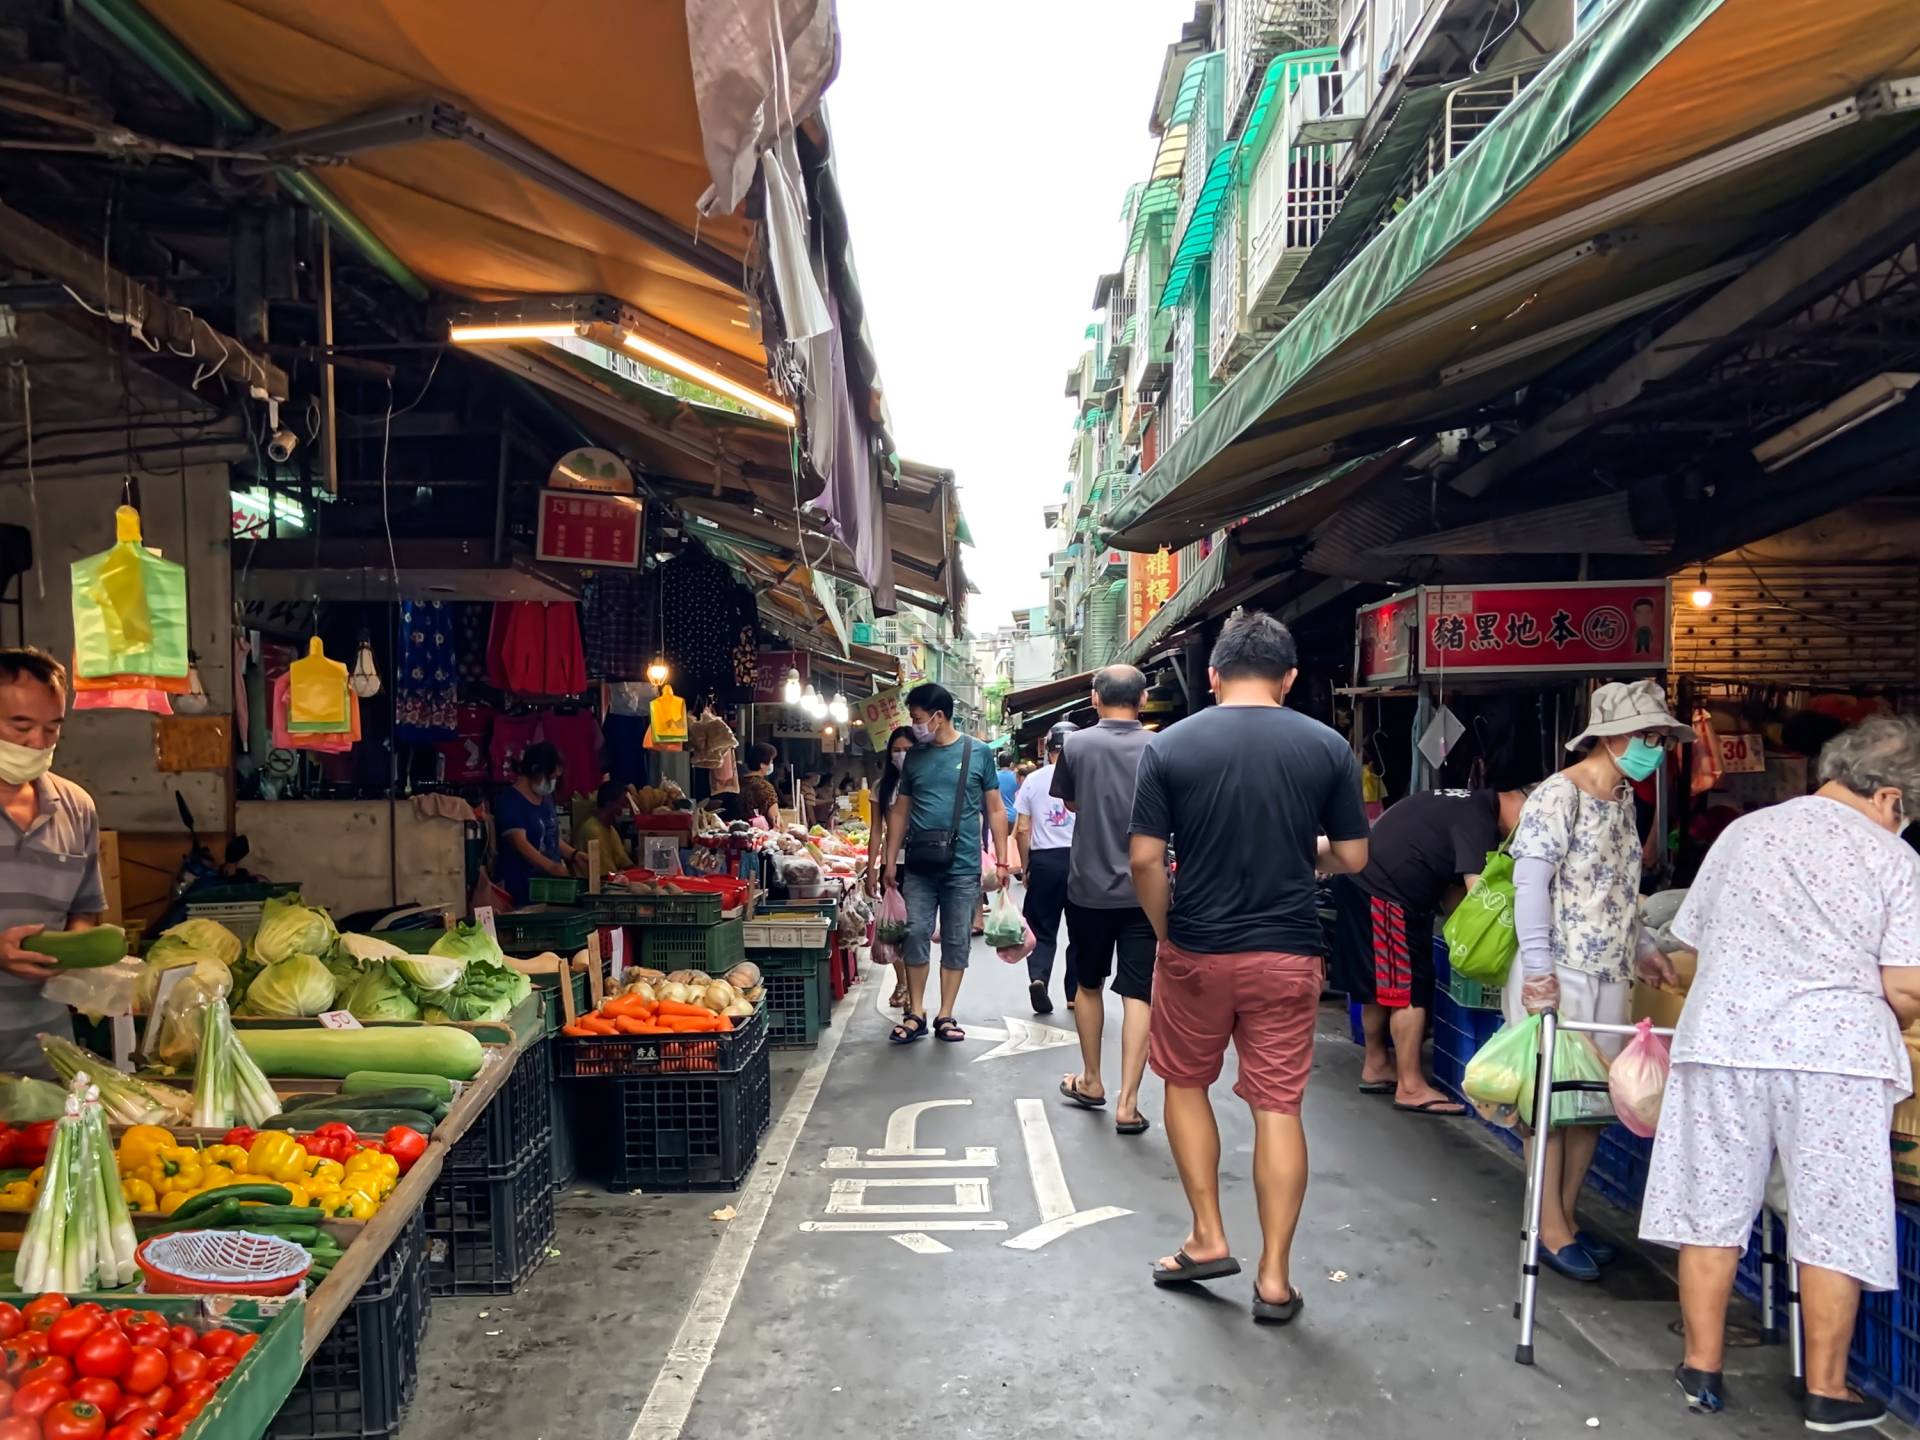 People walk through a wet market in Taiwan